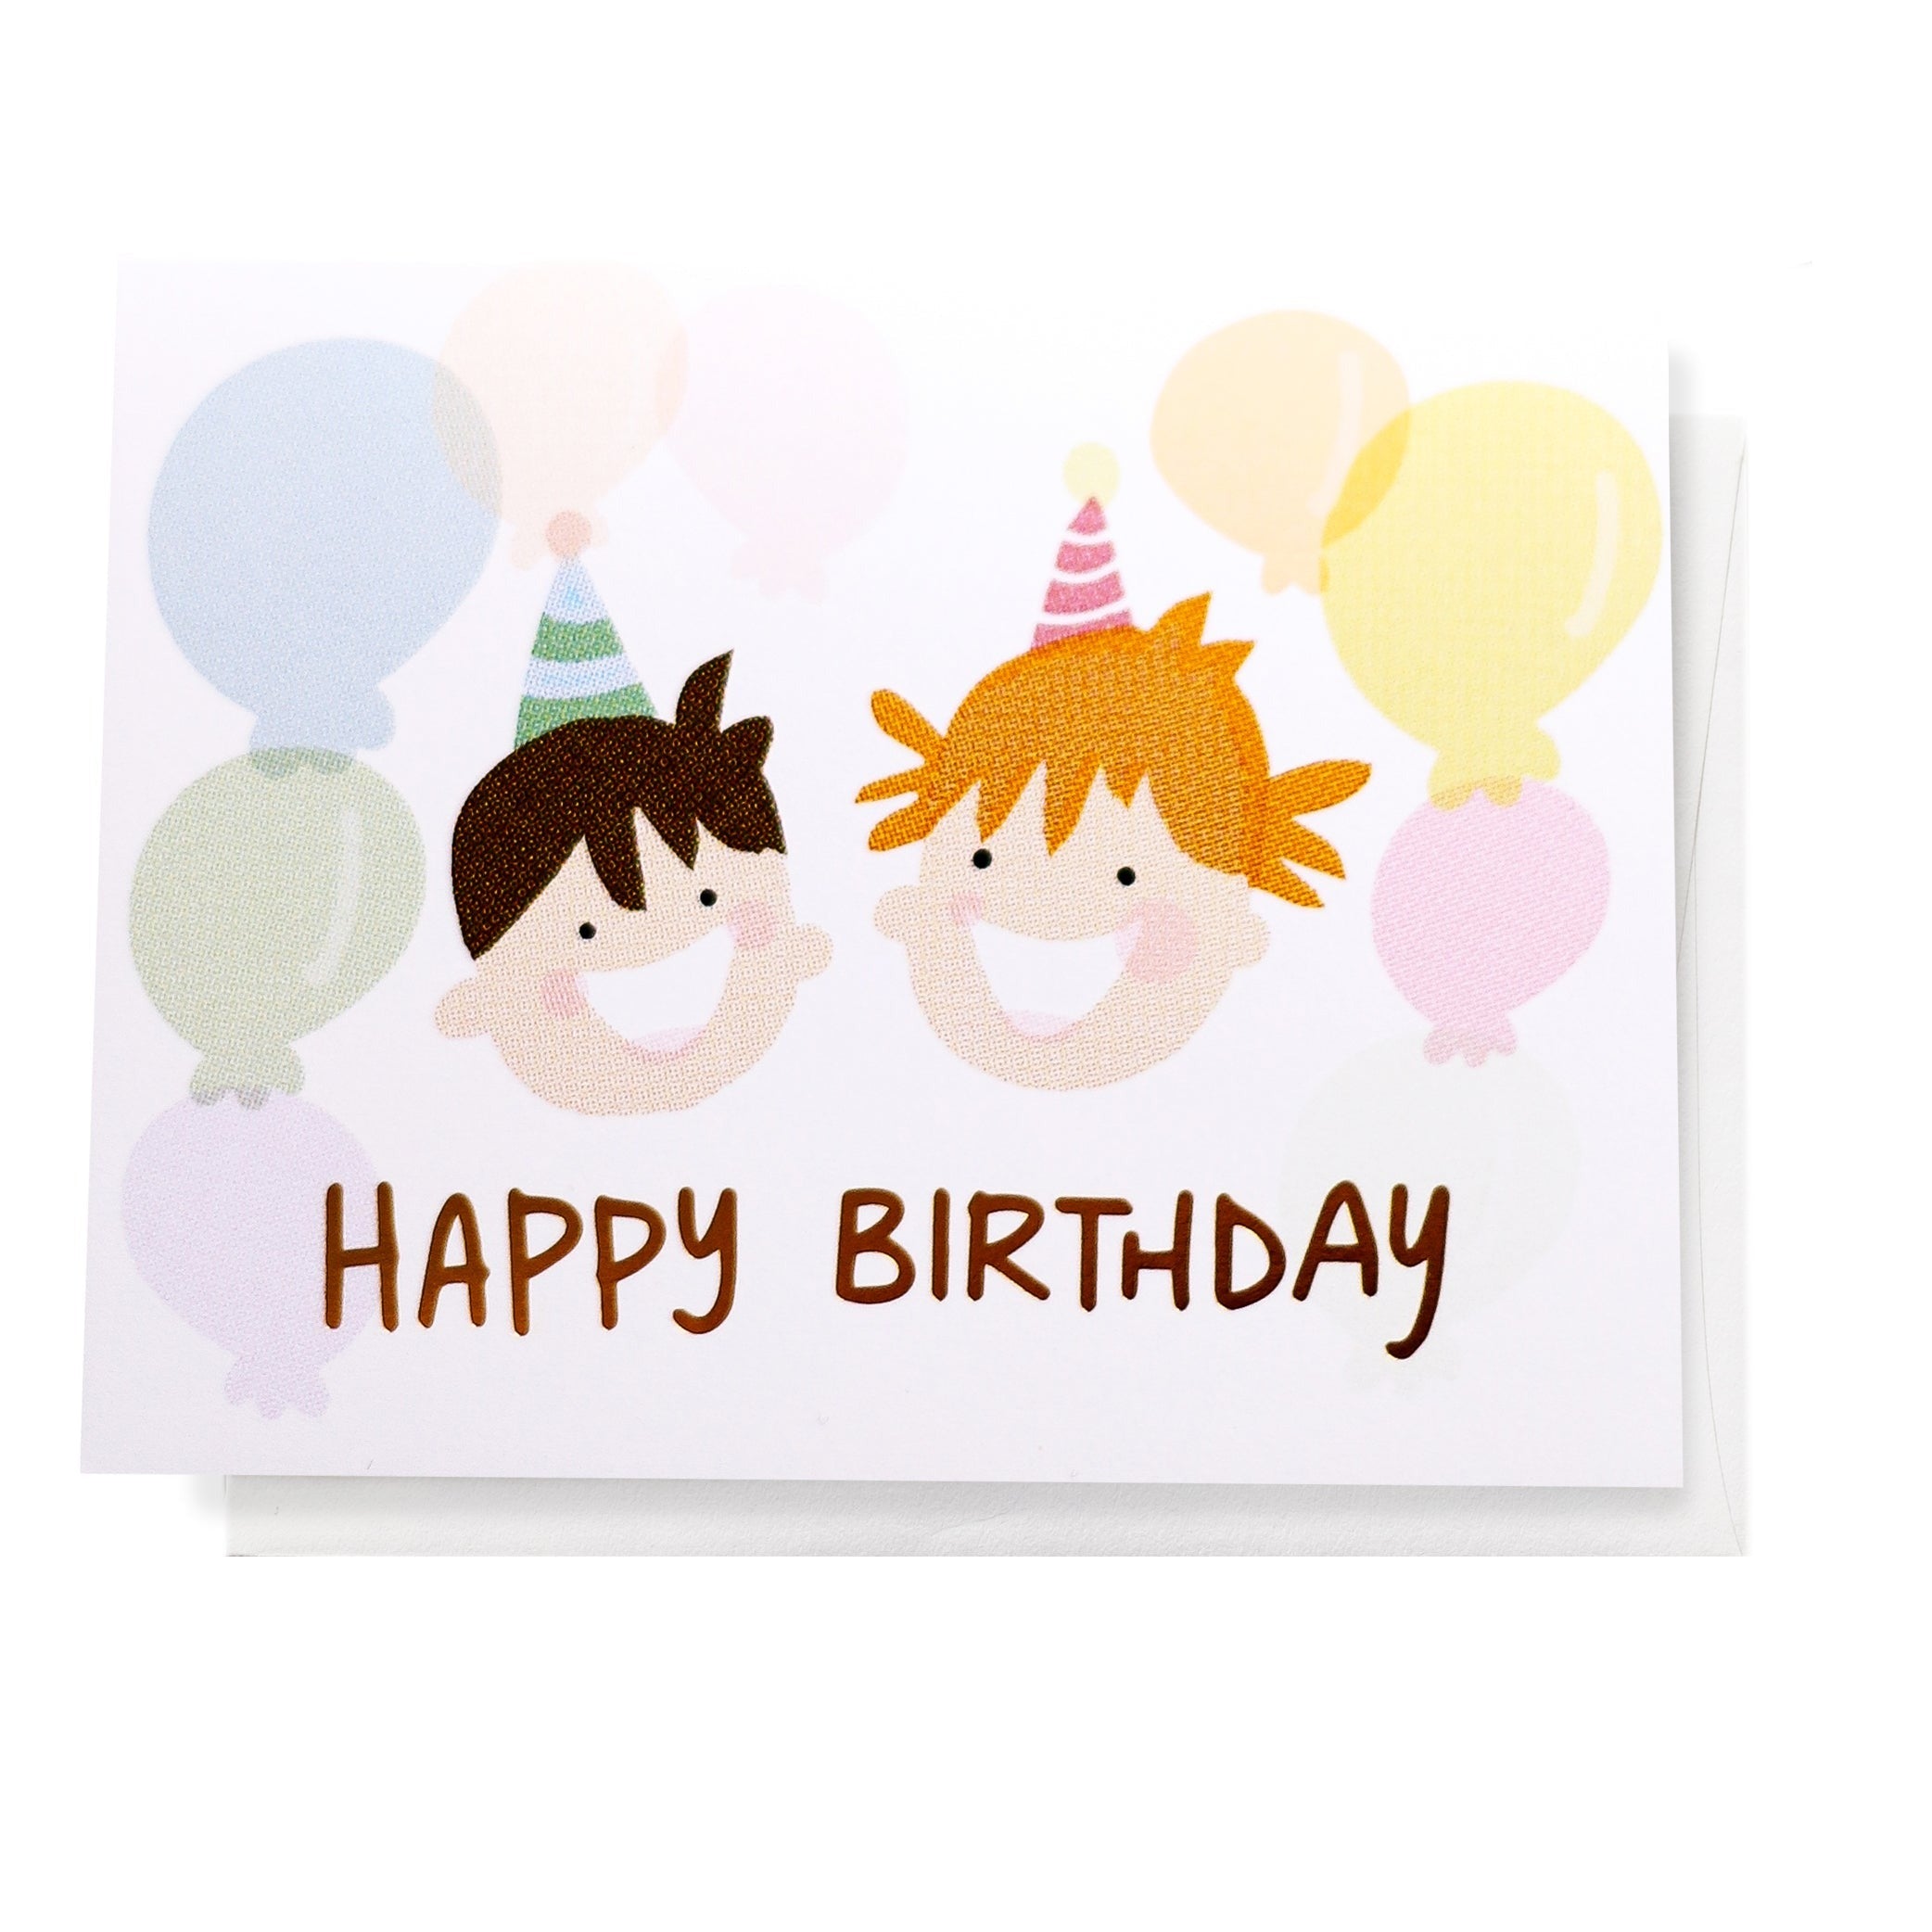 Kids Birthday, Greeting Card